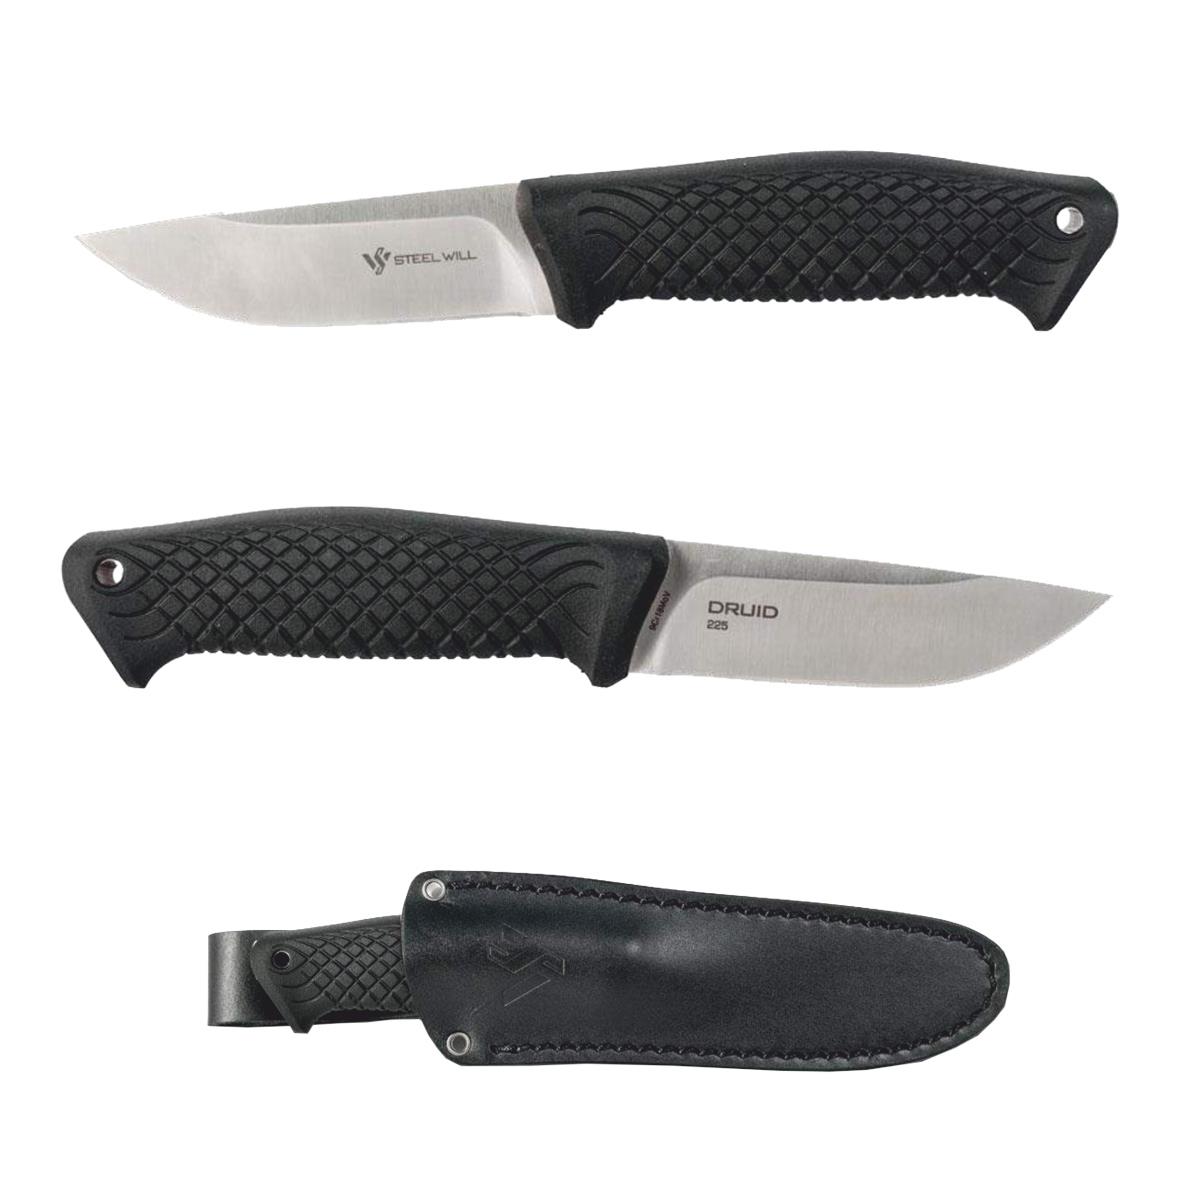 Нож 225 Druid Steel Will складной нож cutjack mini steel will c22m 1bl сталь d2